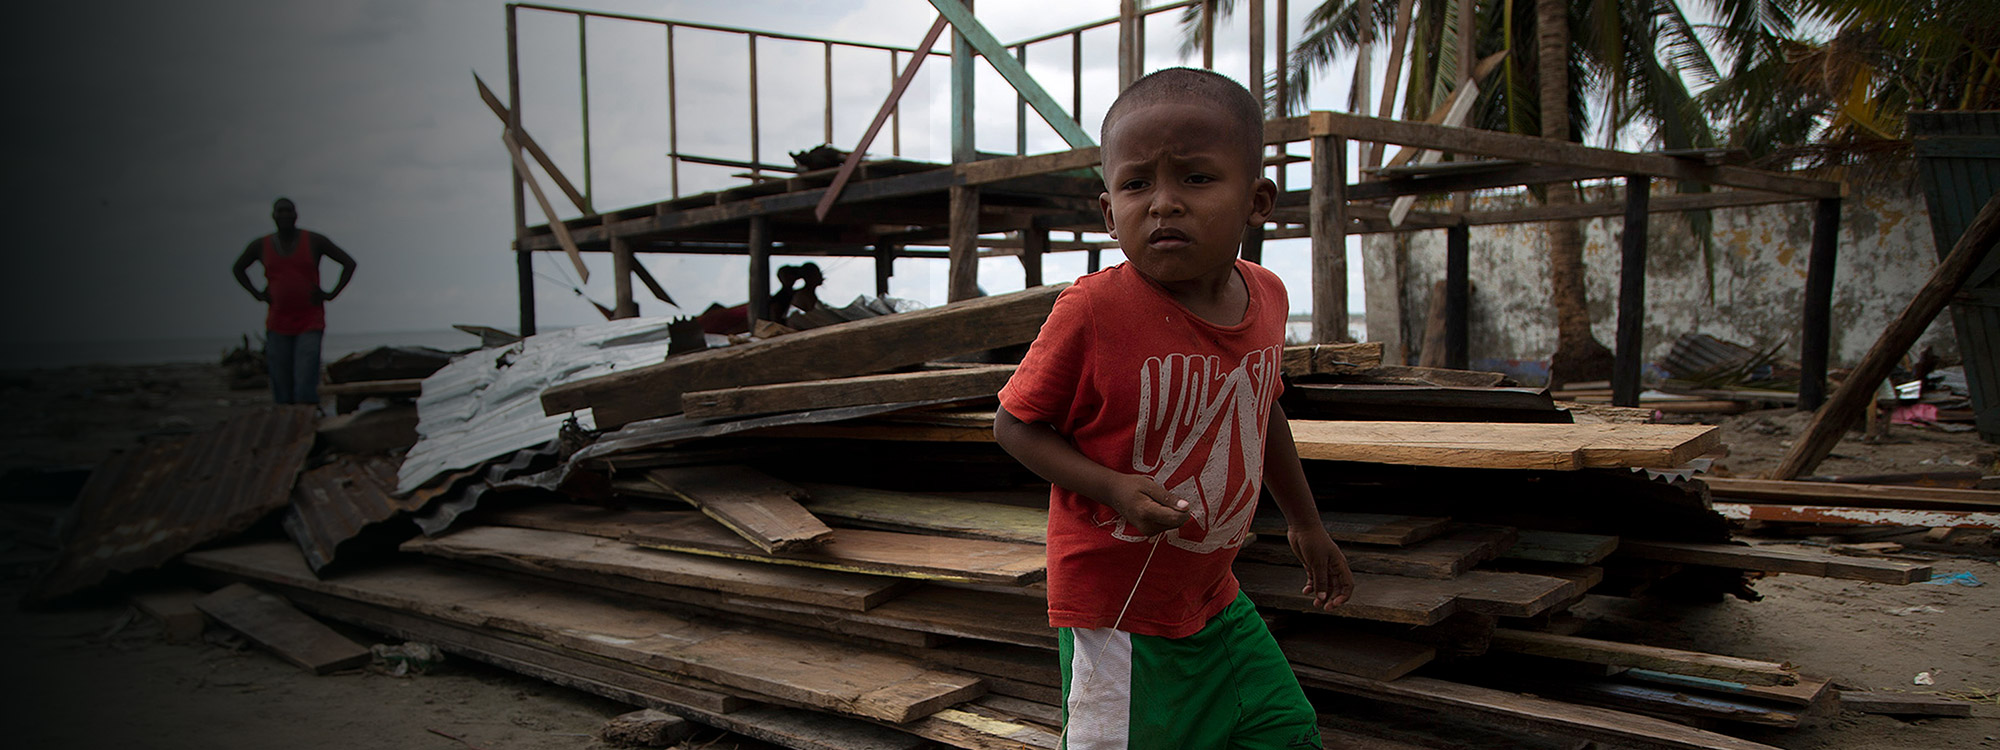 Child affected by Hurricane Iota